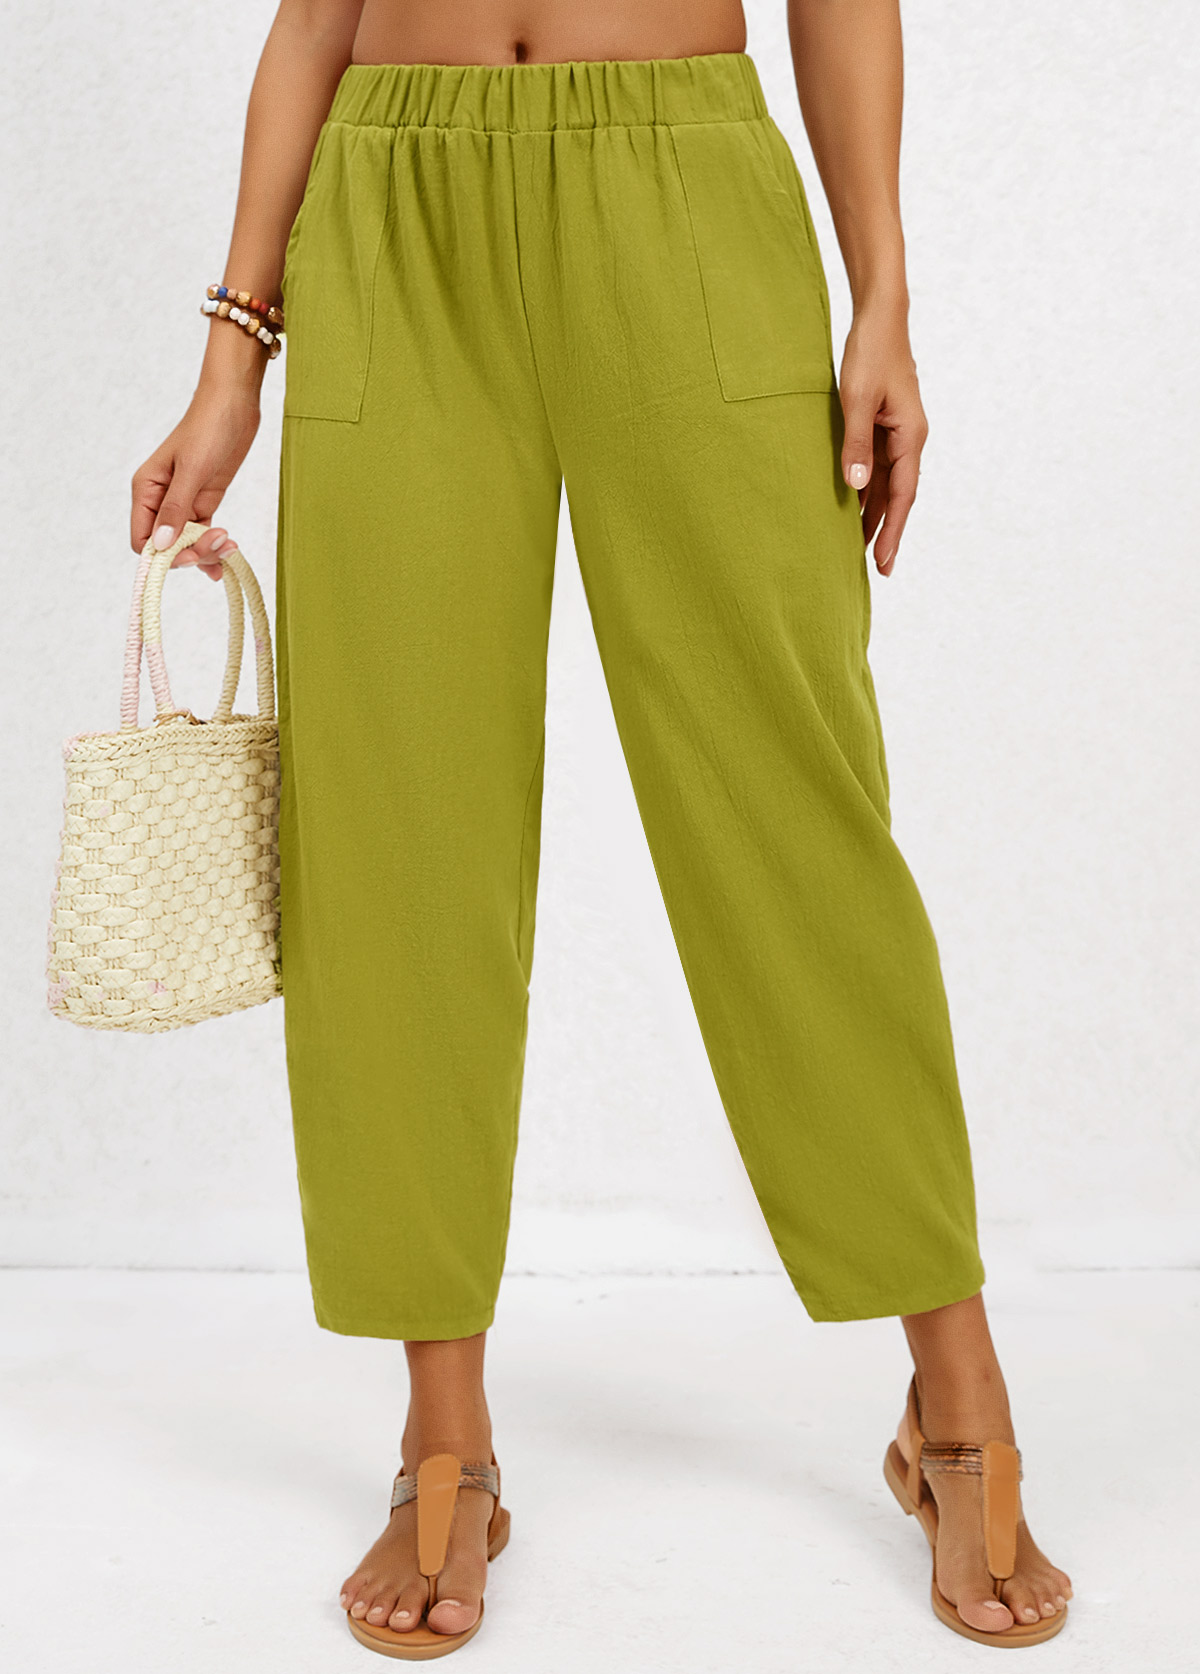 Olive Green Pocket Regular Elastic Waist Mid Waisted Pants